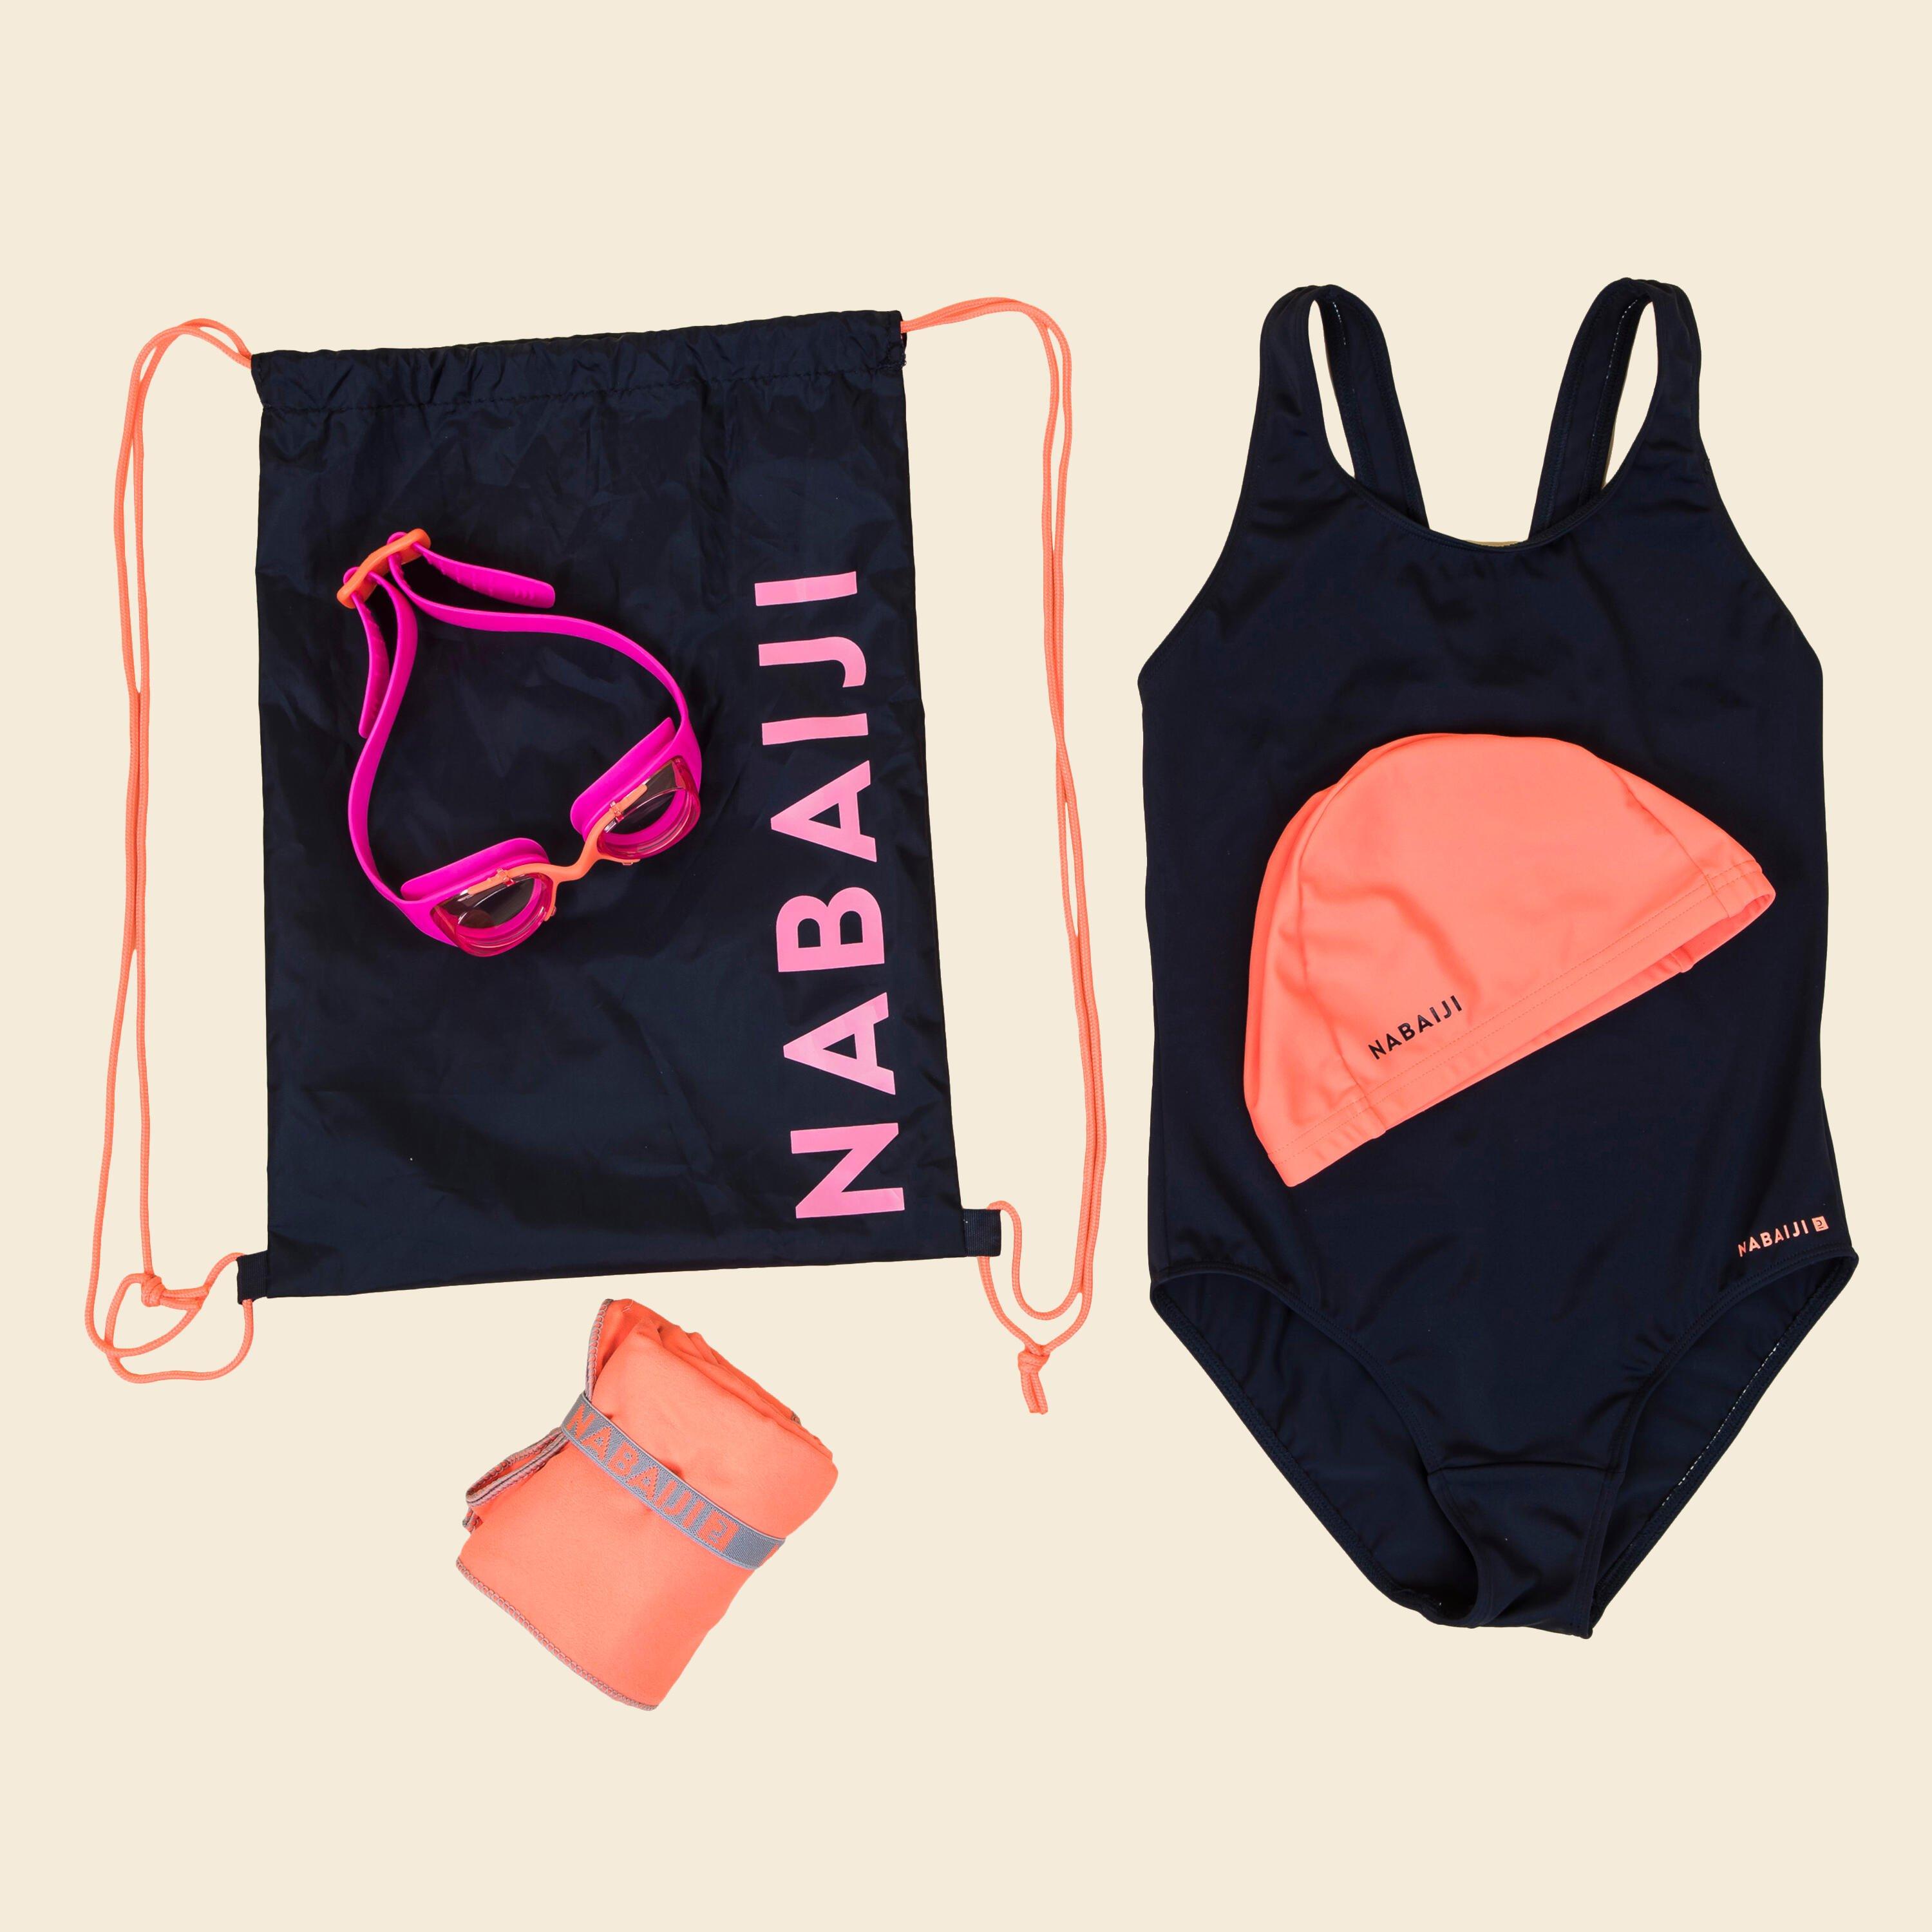 Start 100 Swimming Set - / (Bag, Towel, Goggles, Cap, Swimsuit